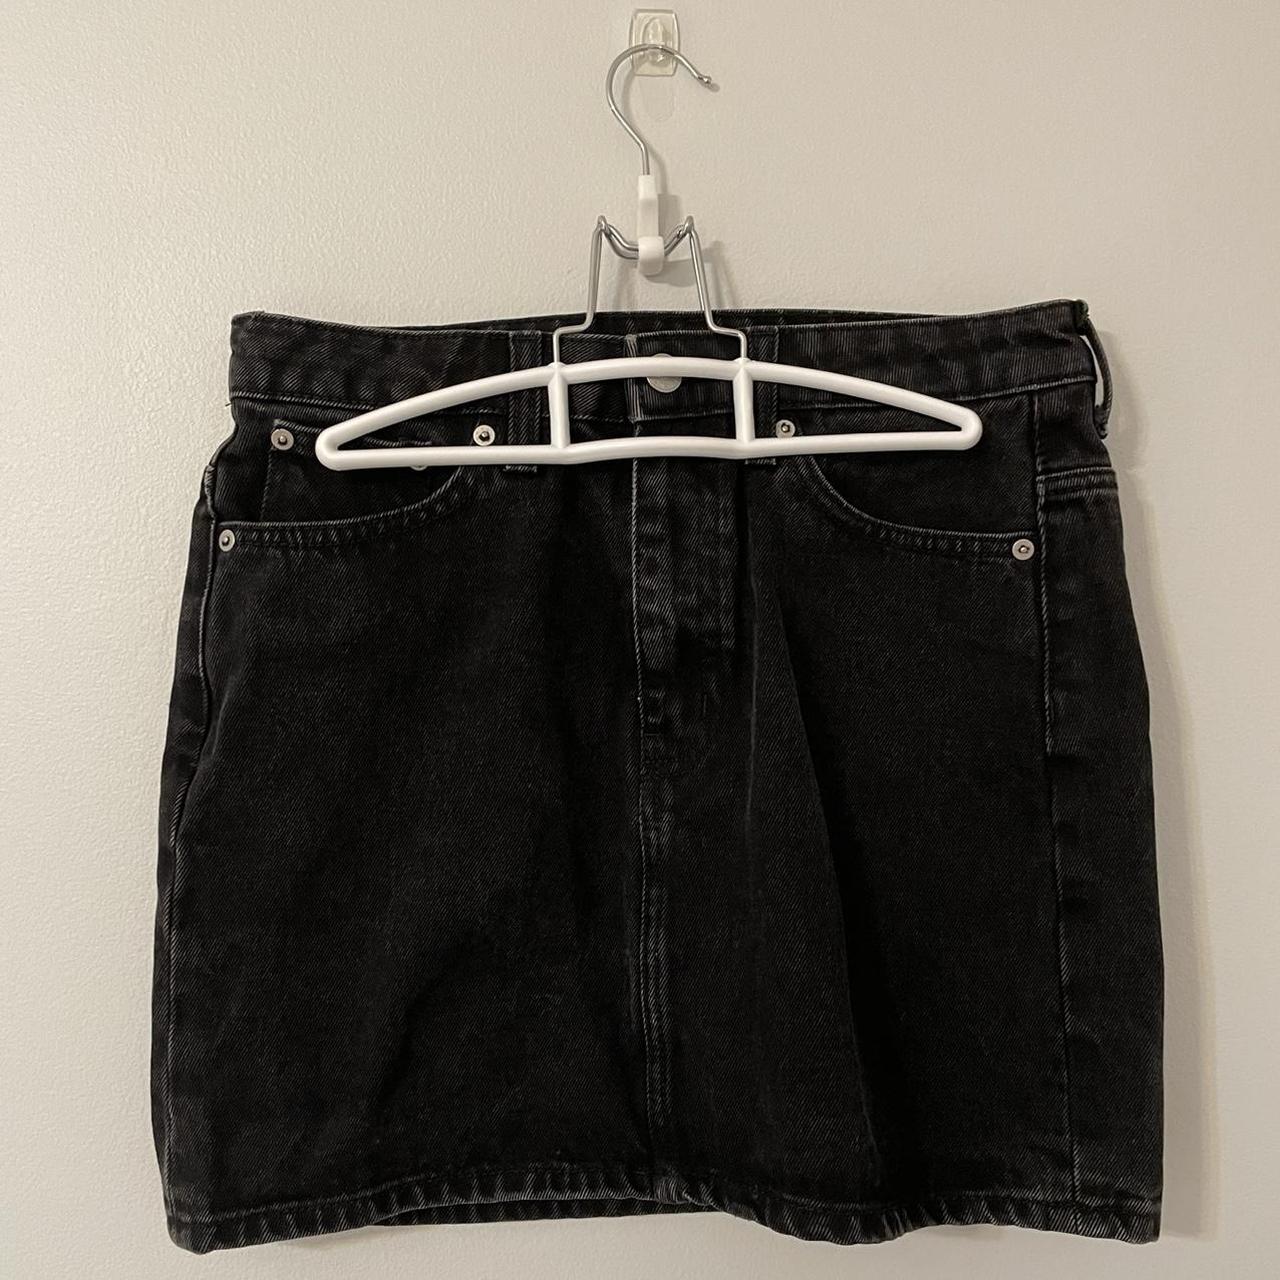 Product Image 4 - Weekday black denim skirt. only